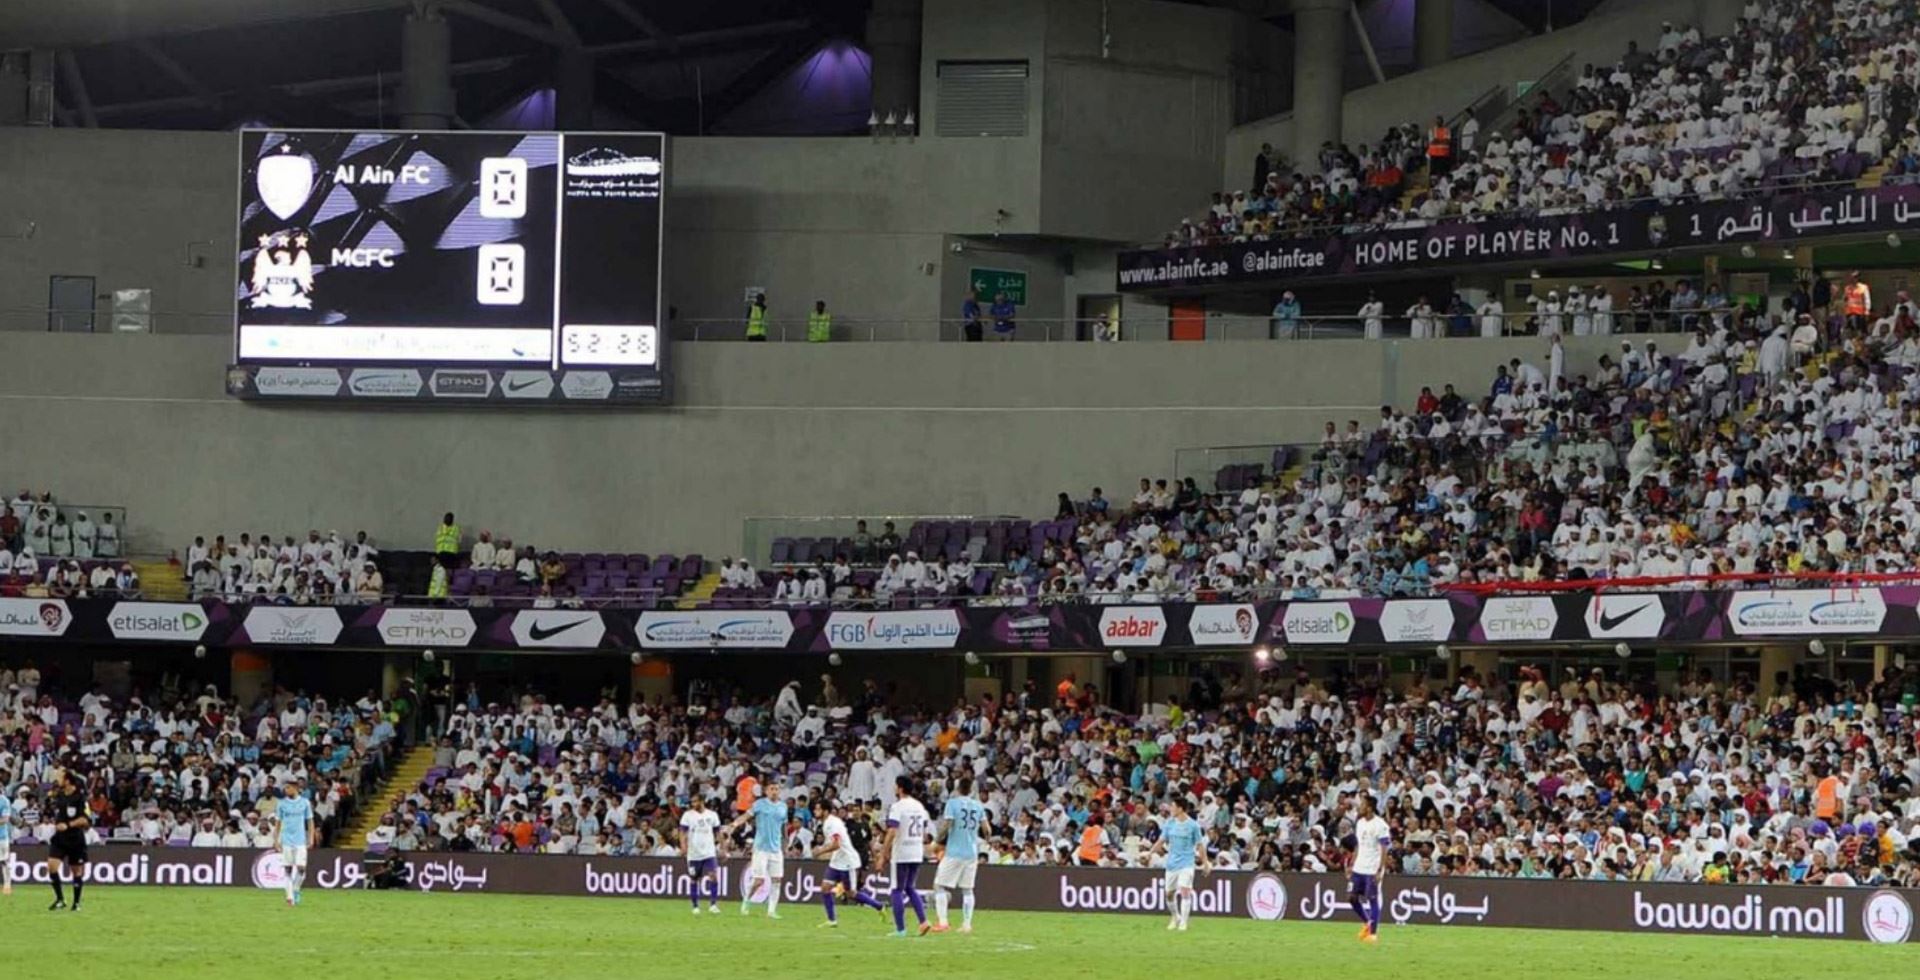 UAE Arabian Gulf League, 2016, United Arab Emirates